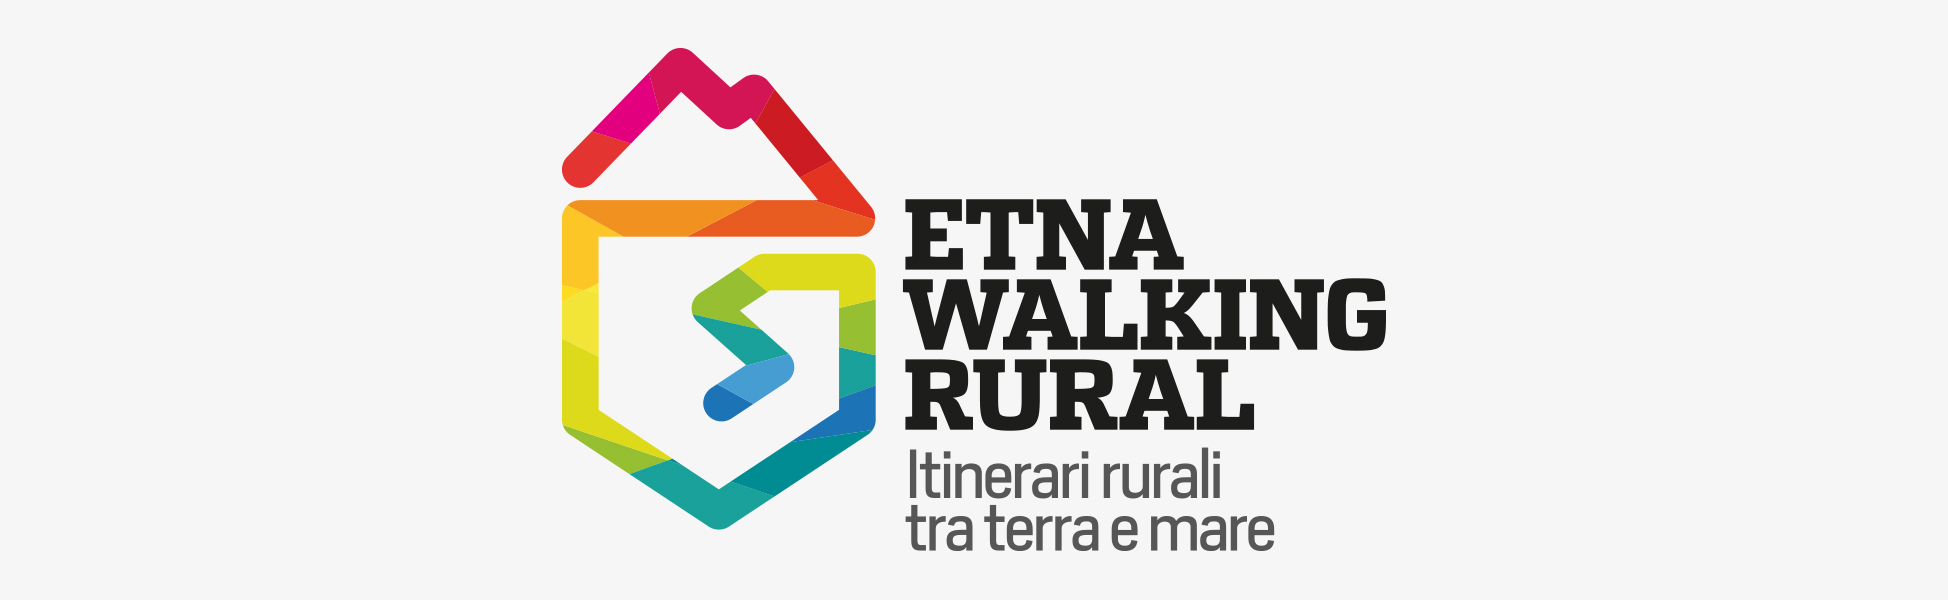 Etna Walking Rural